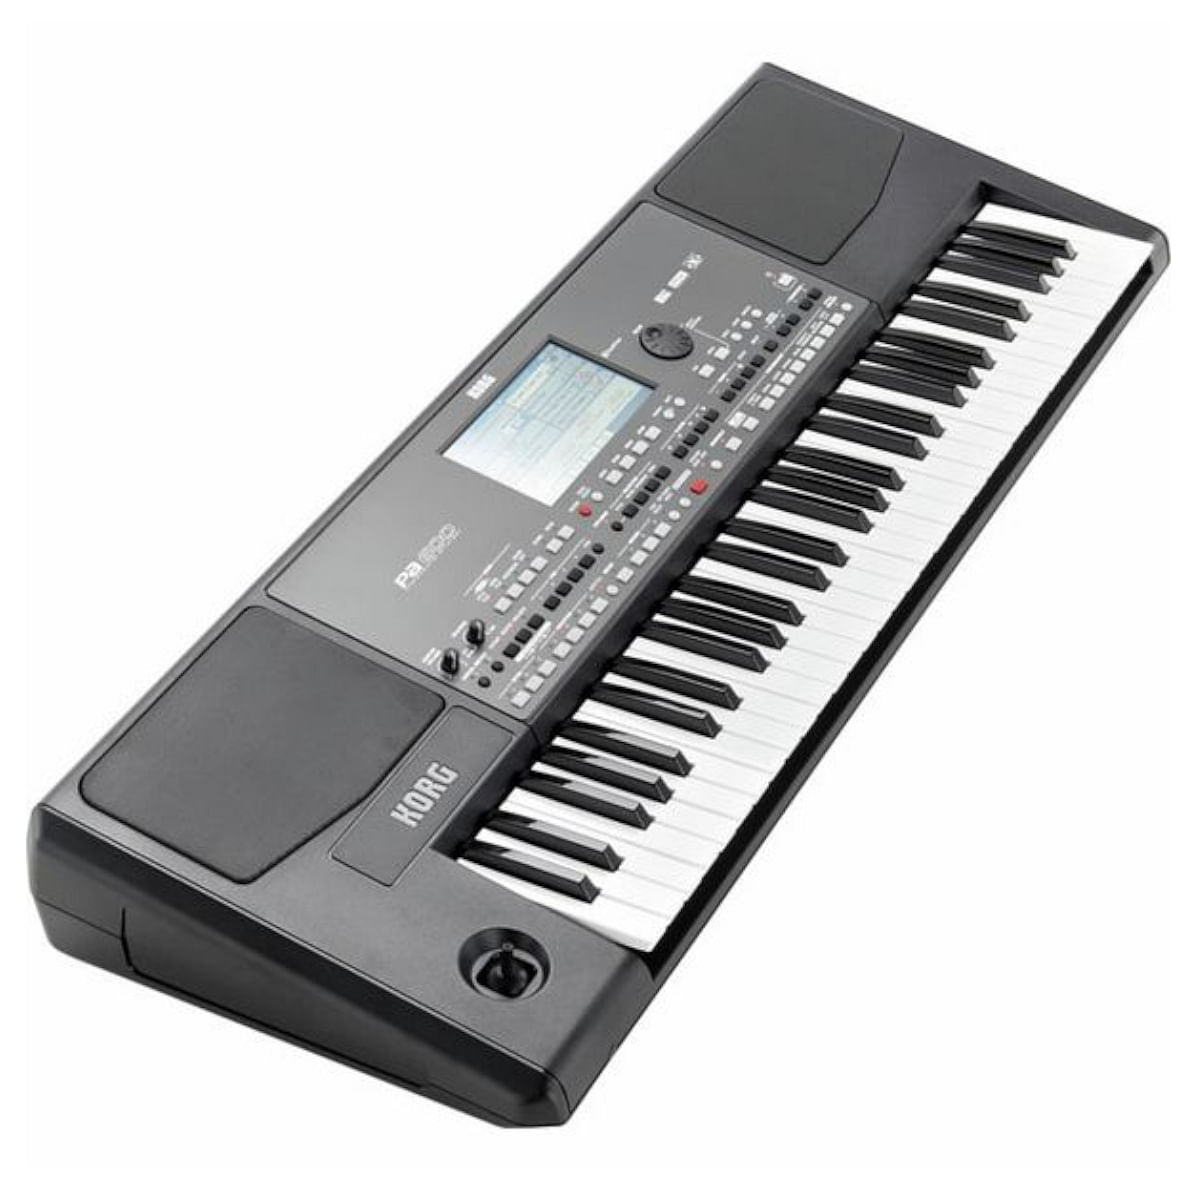 Buy Korg, Arranger Keyboard Pa-600 Online